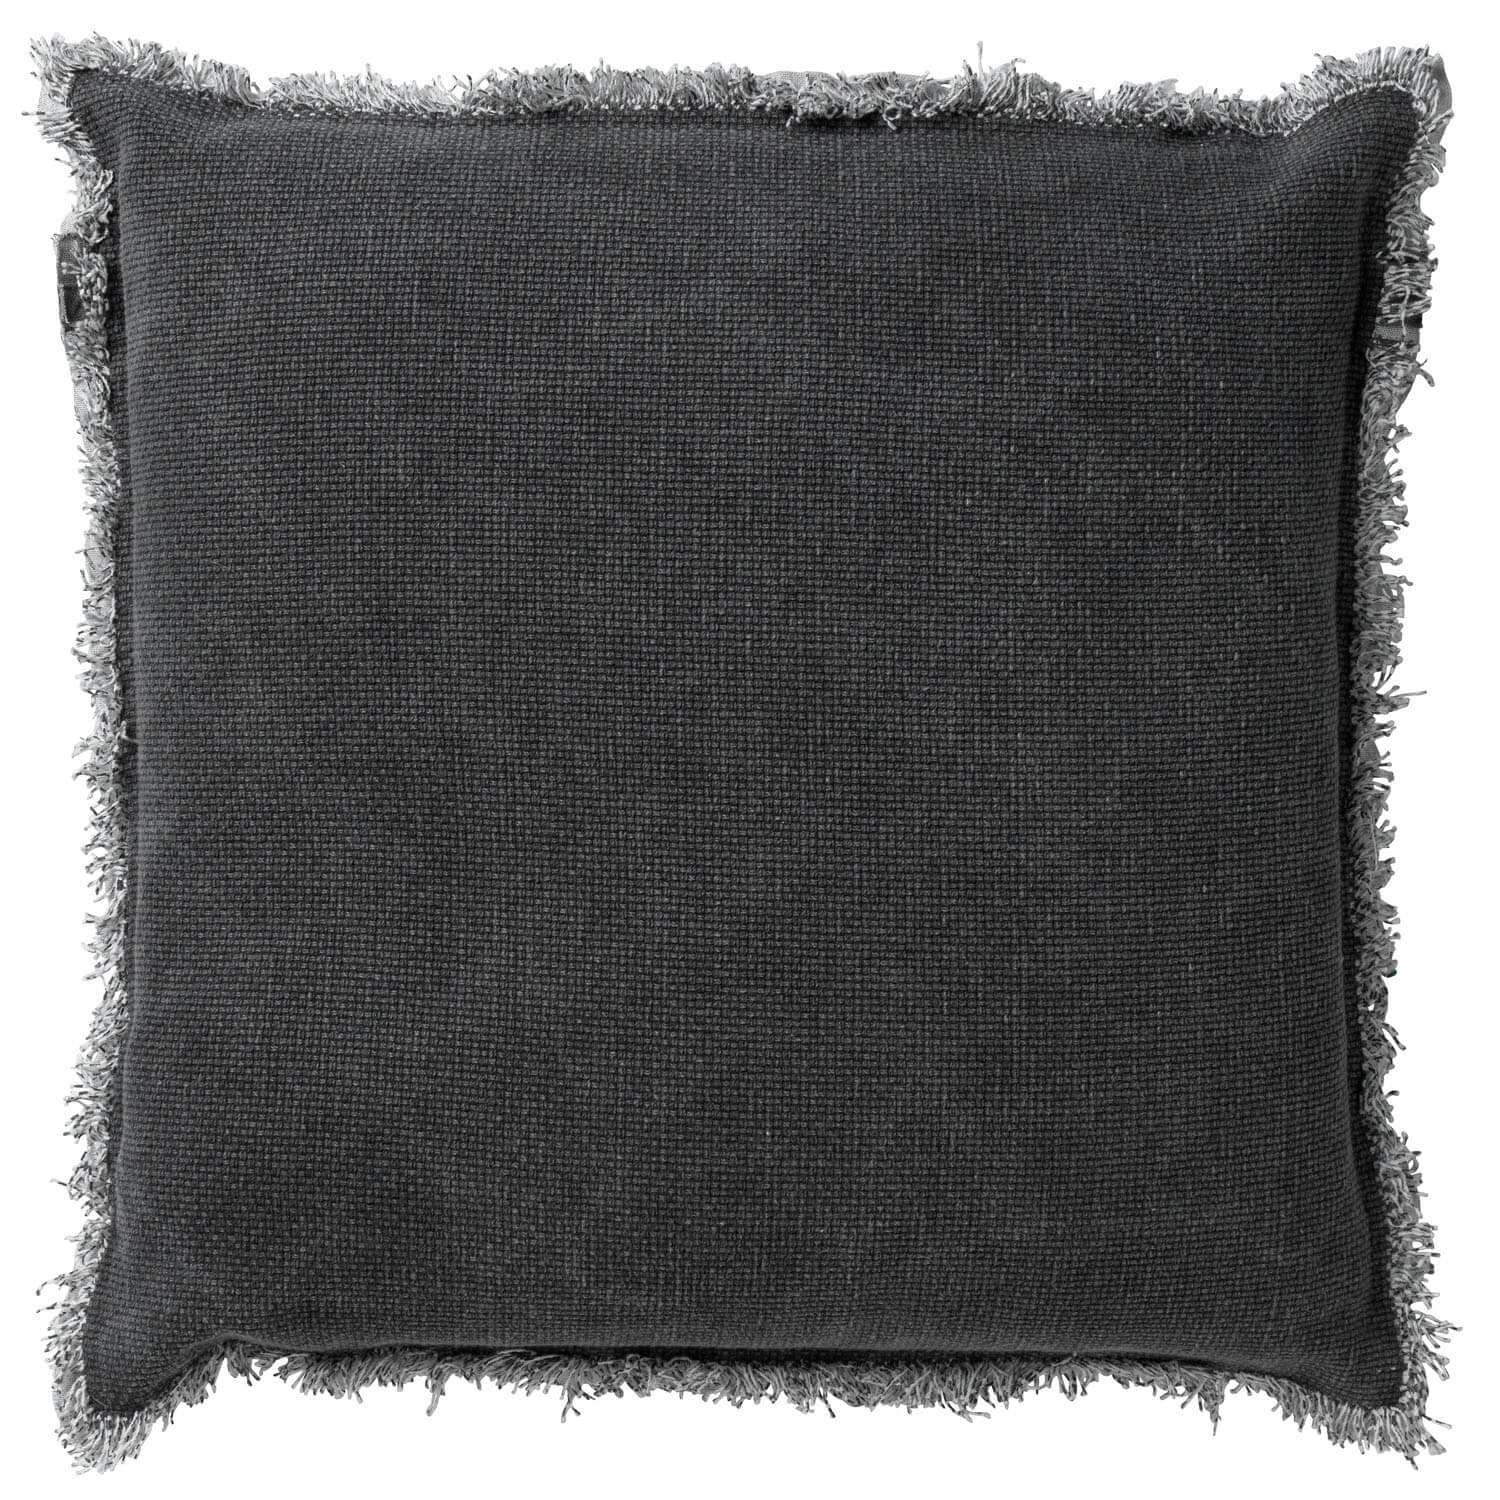 BURTO - Cushion 45x45 cm Charcoal Gray - anthracite